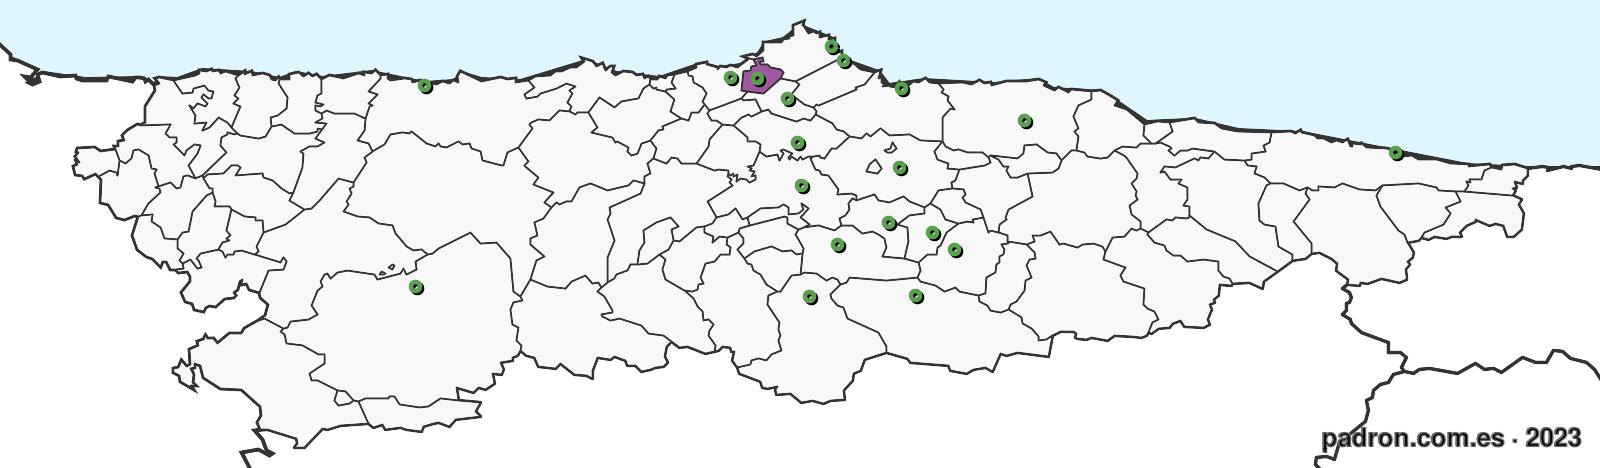 malgaches en asturias.